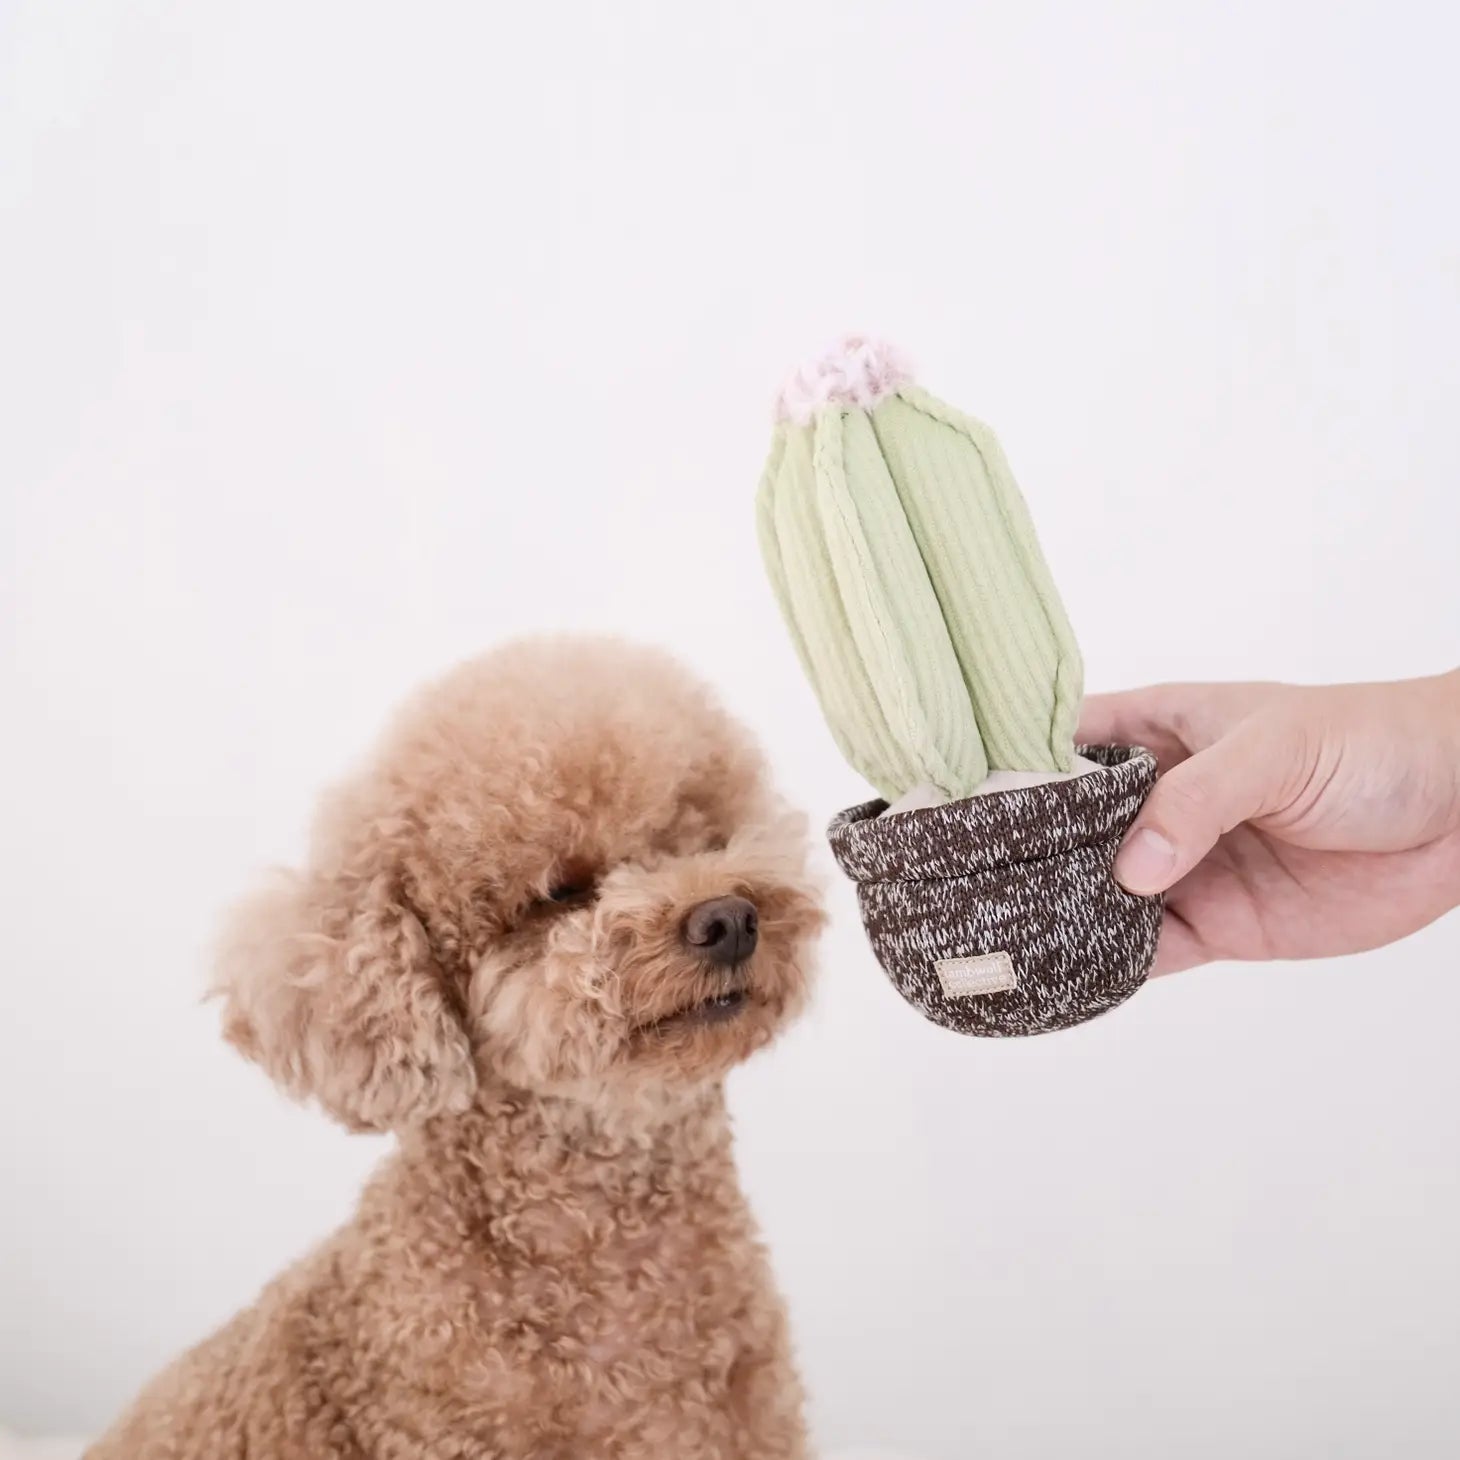 Cactus, juguete para perros